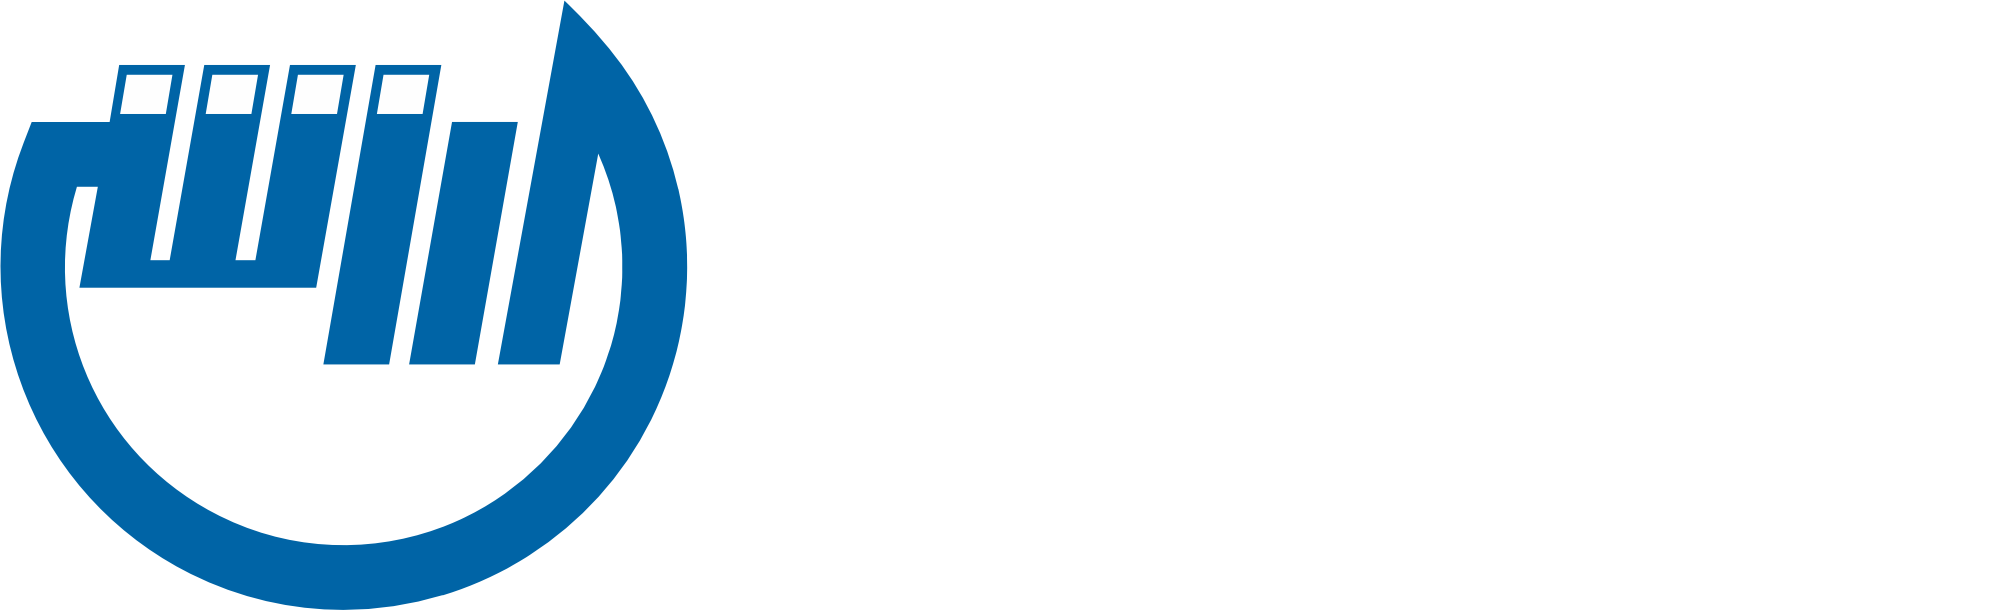 Arzesh Holding